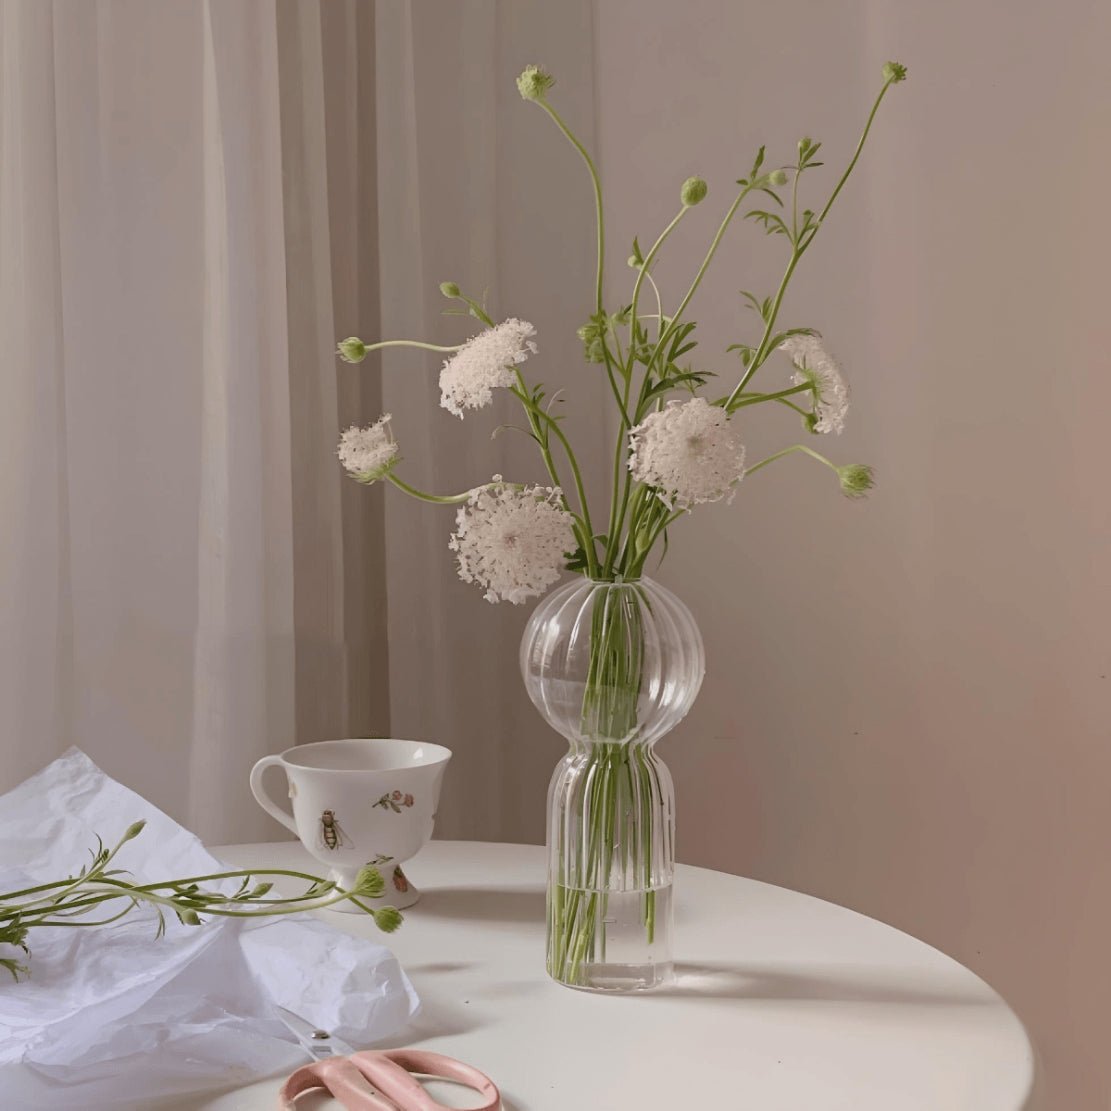 Elegant, tall ball glass vase with white flowers